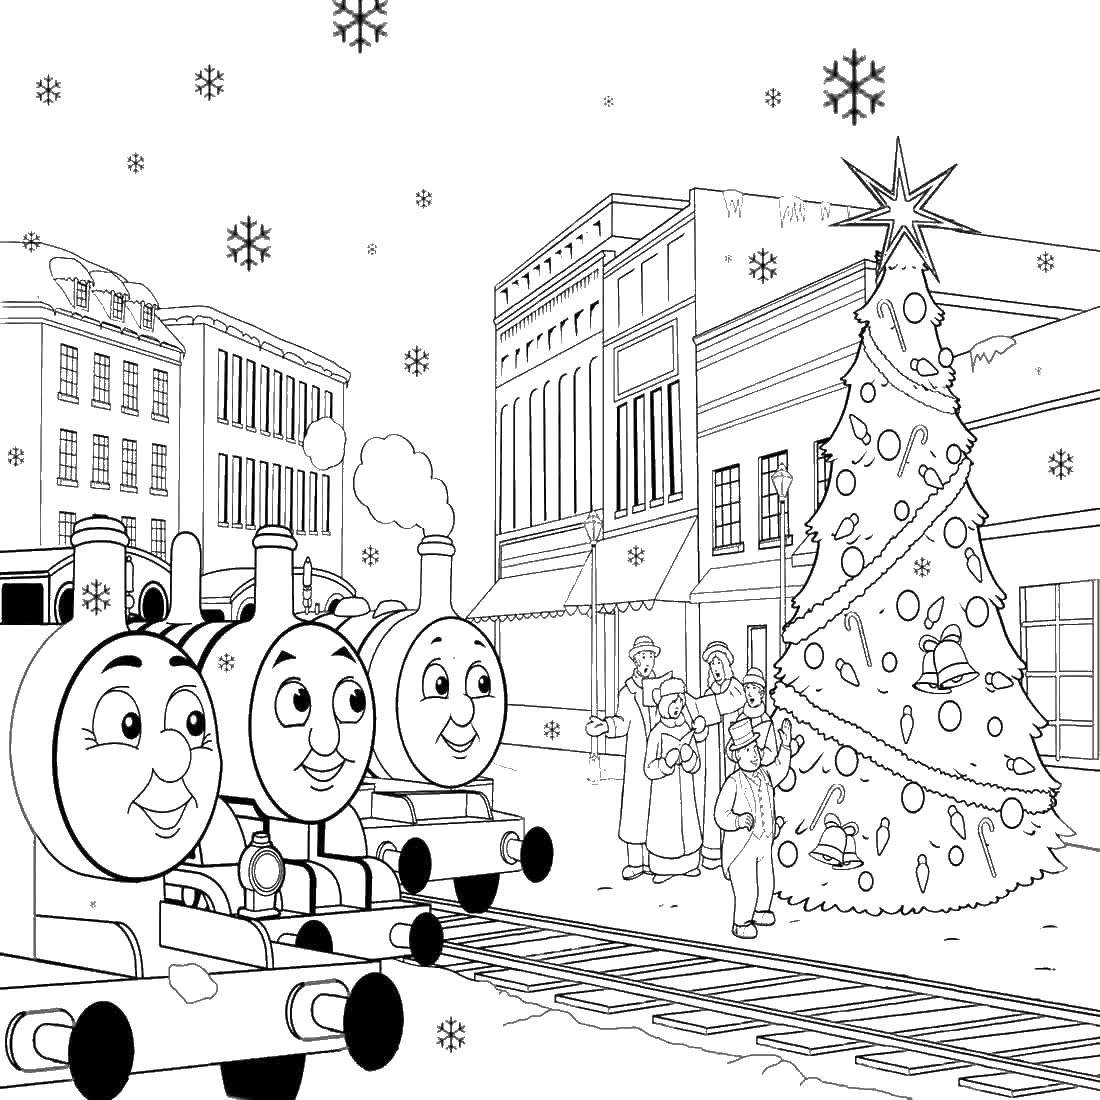 Coloring Thomas and the Christmas tree. Category cartoons. Tags:  cartoons, Thomas the train.